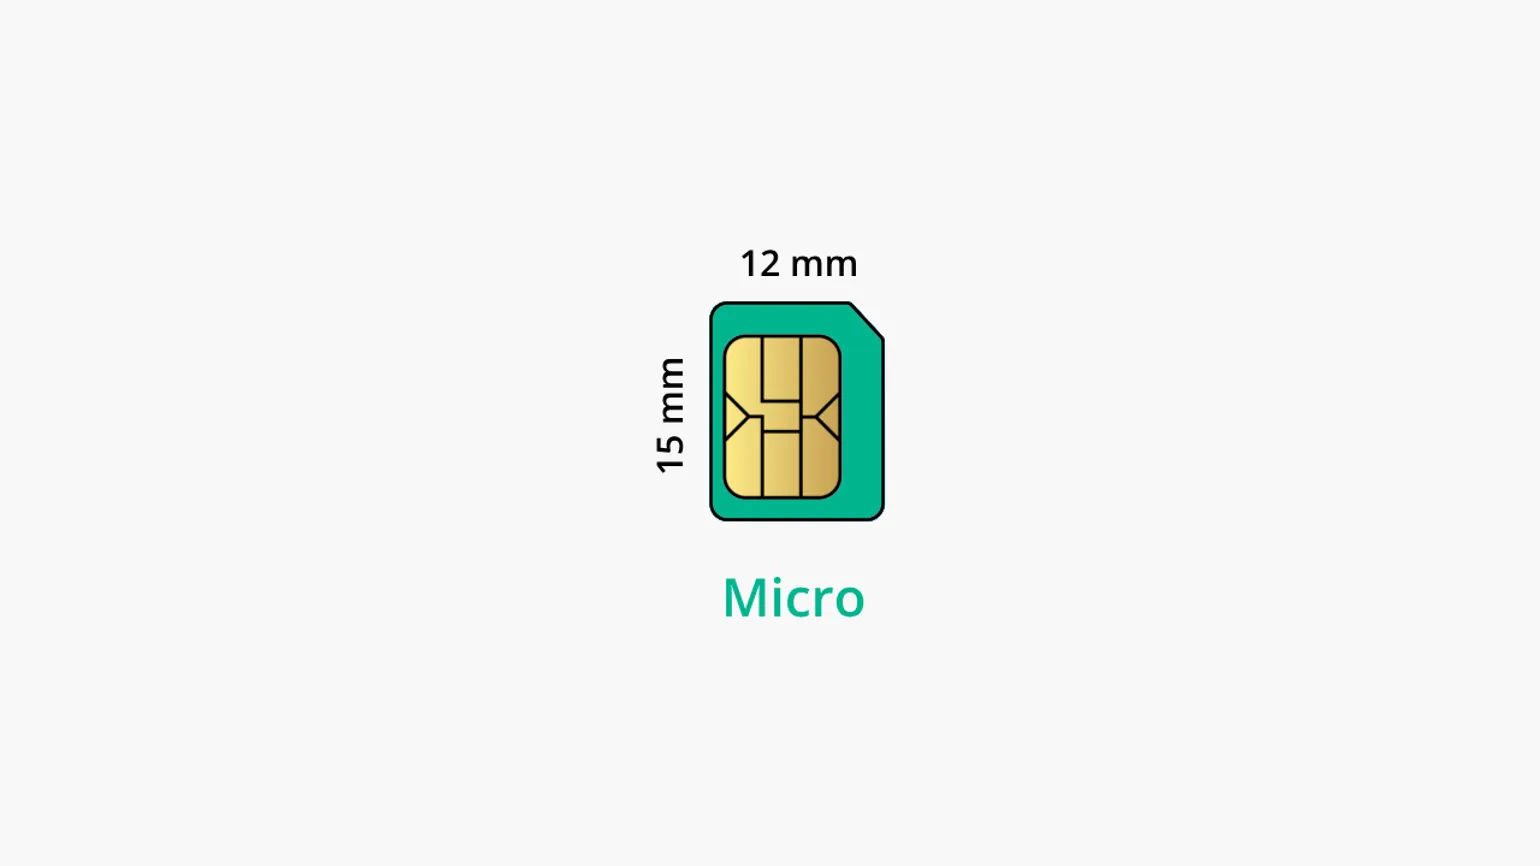 micro SIM card size